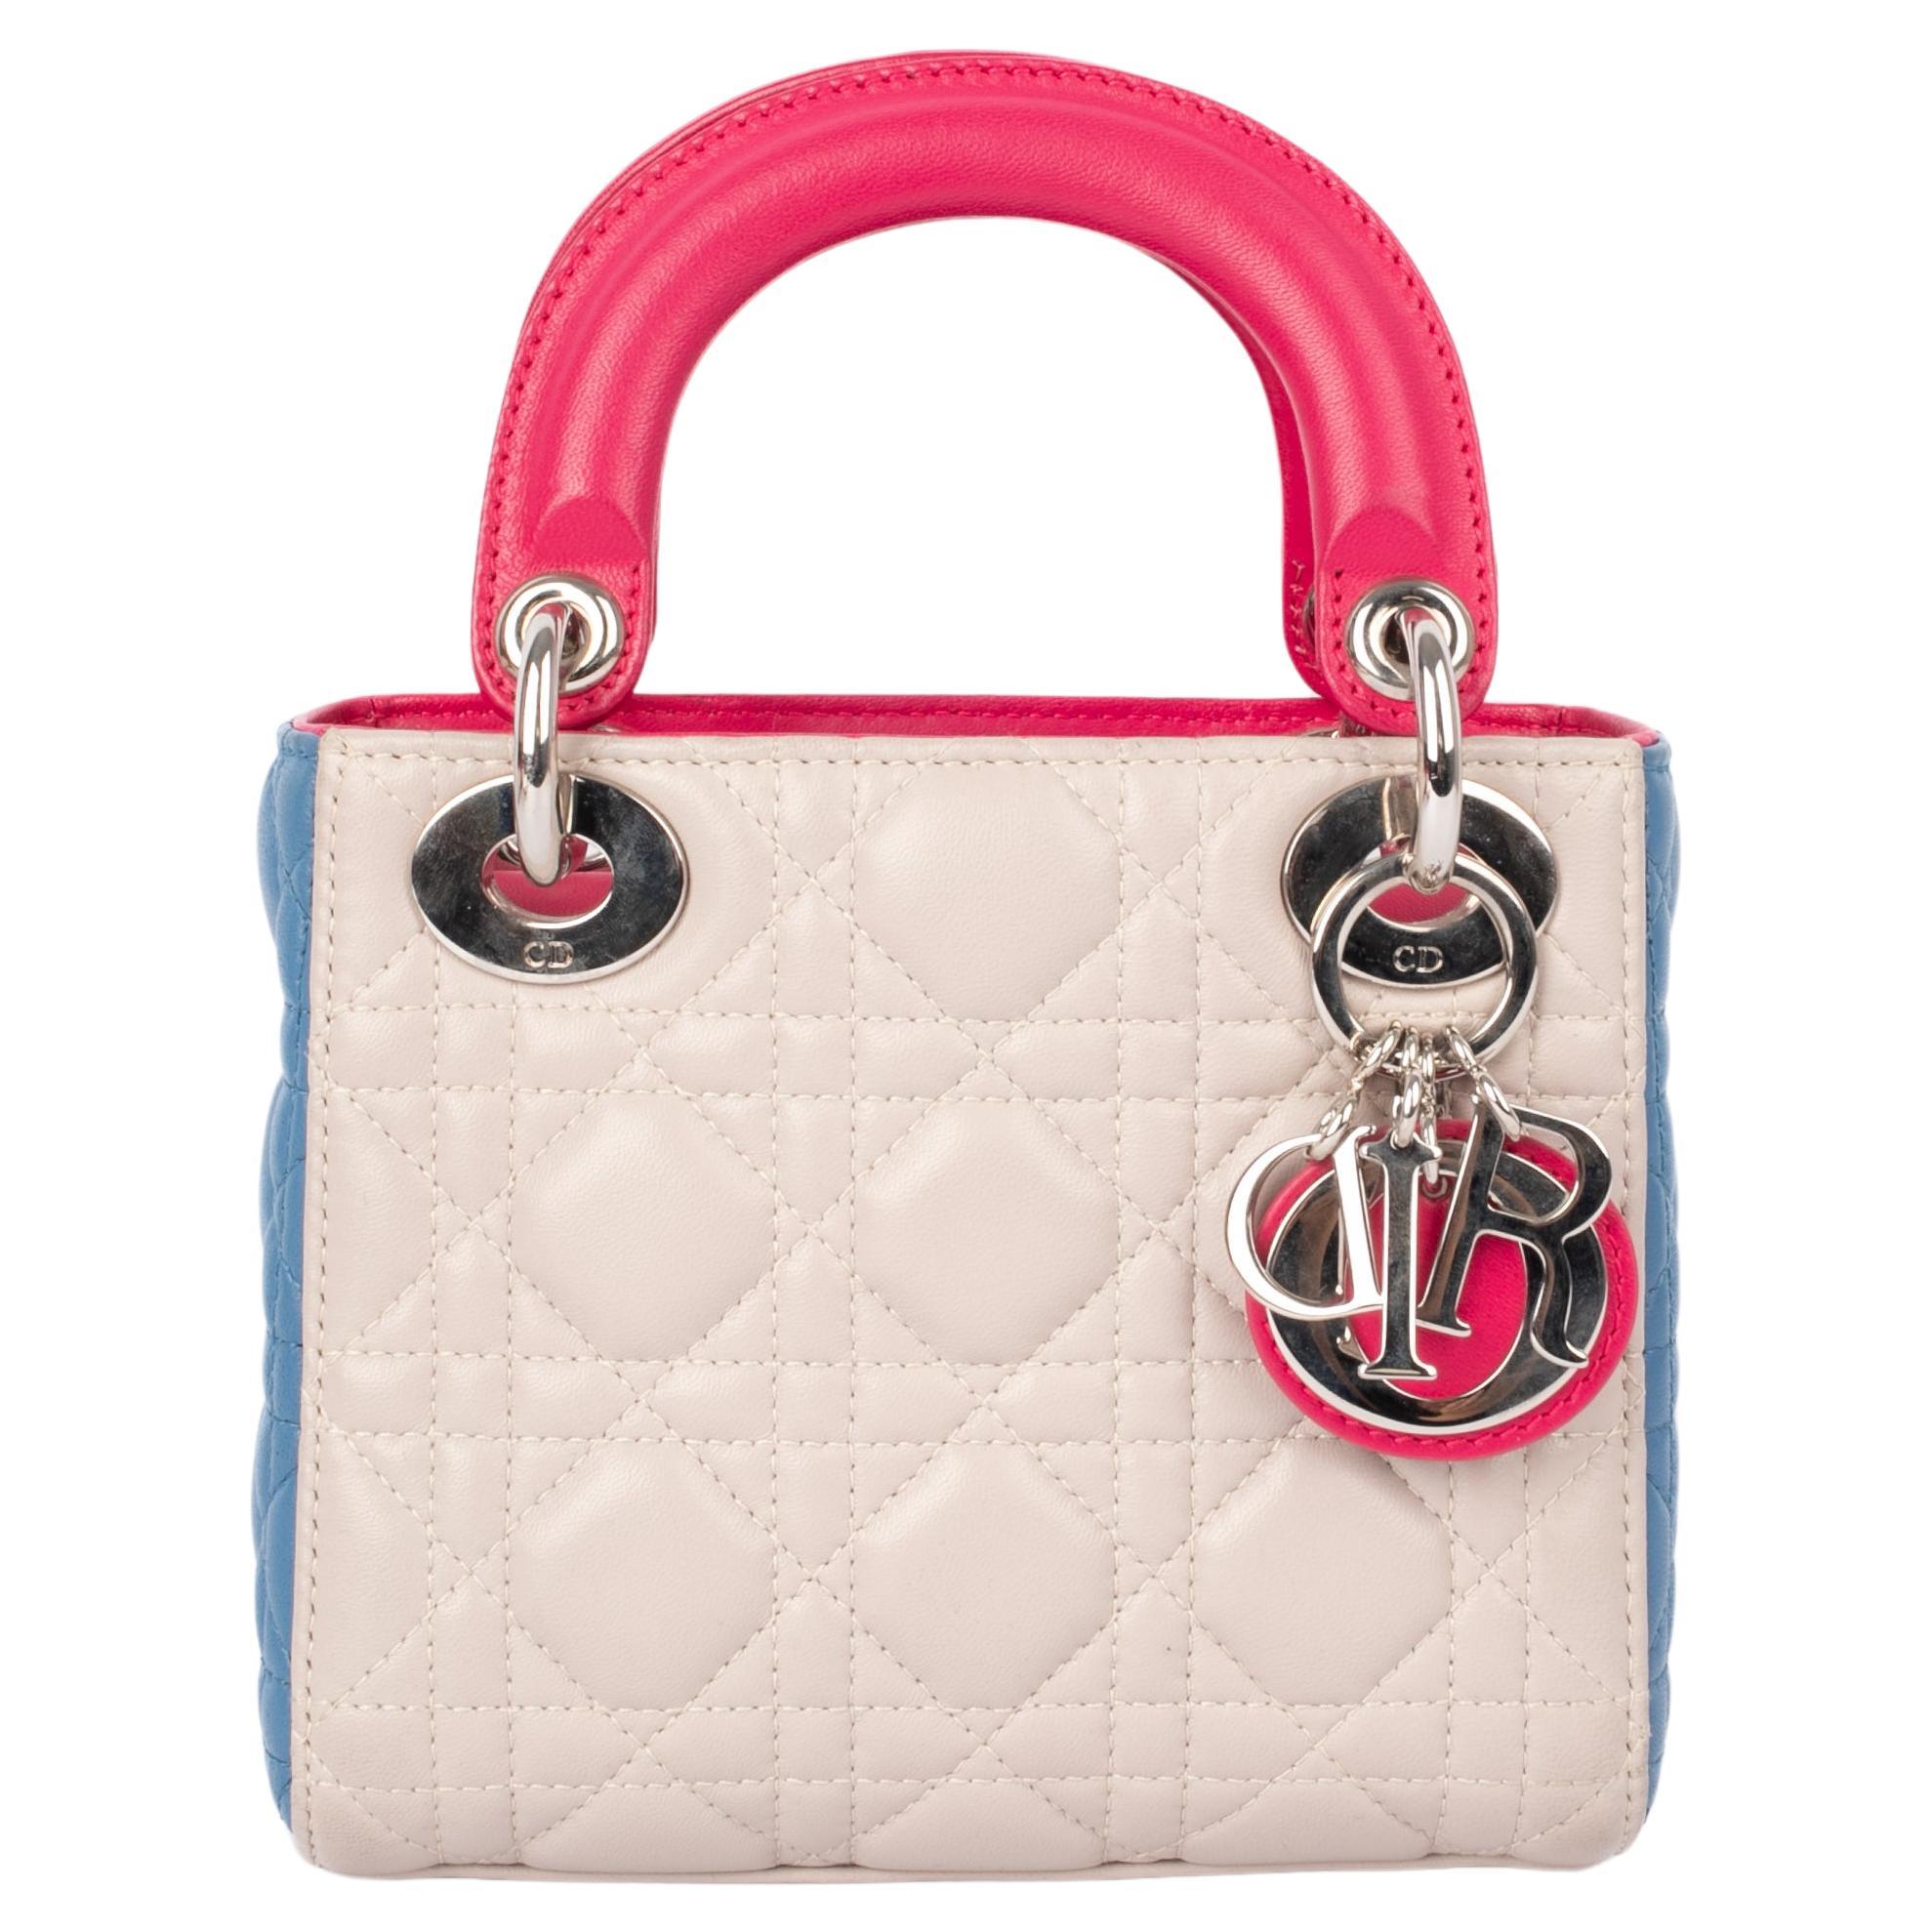 Mini sac Lady Dior 2014 en vente